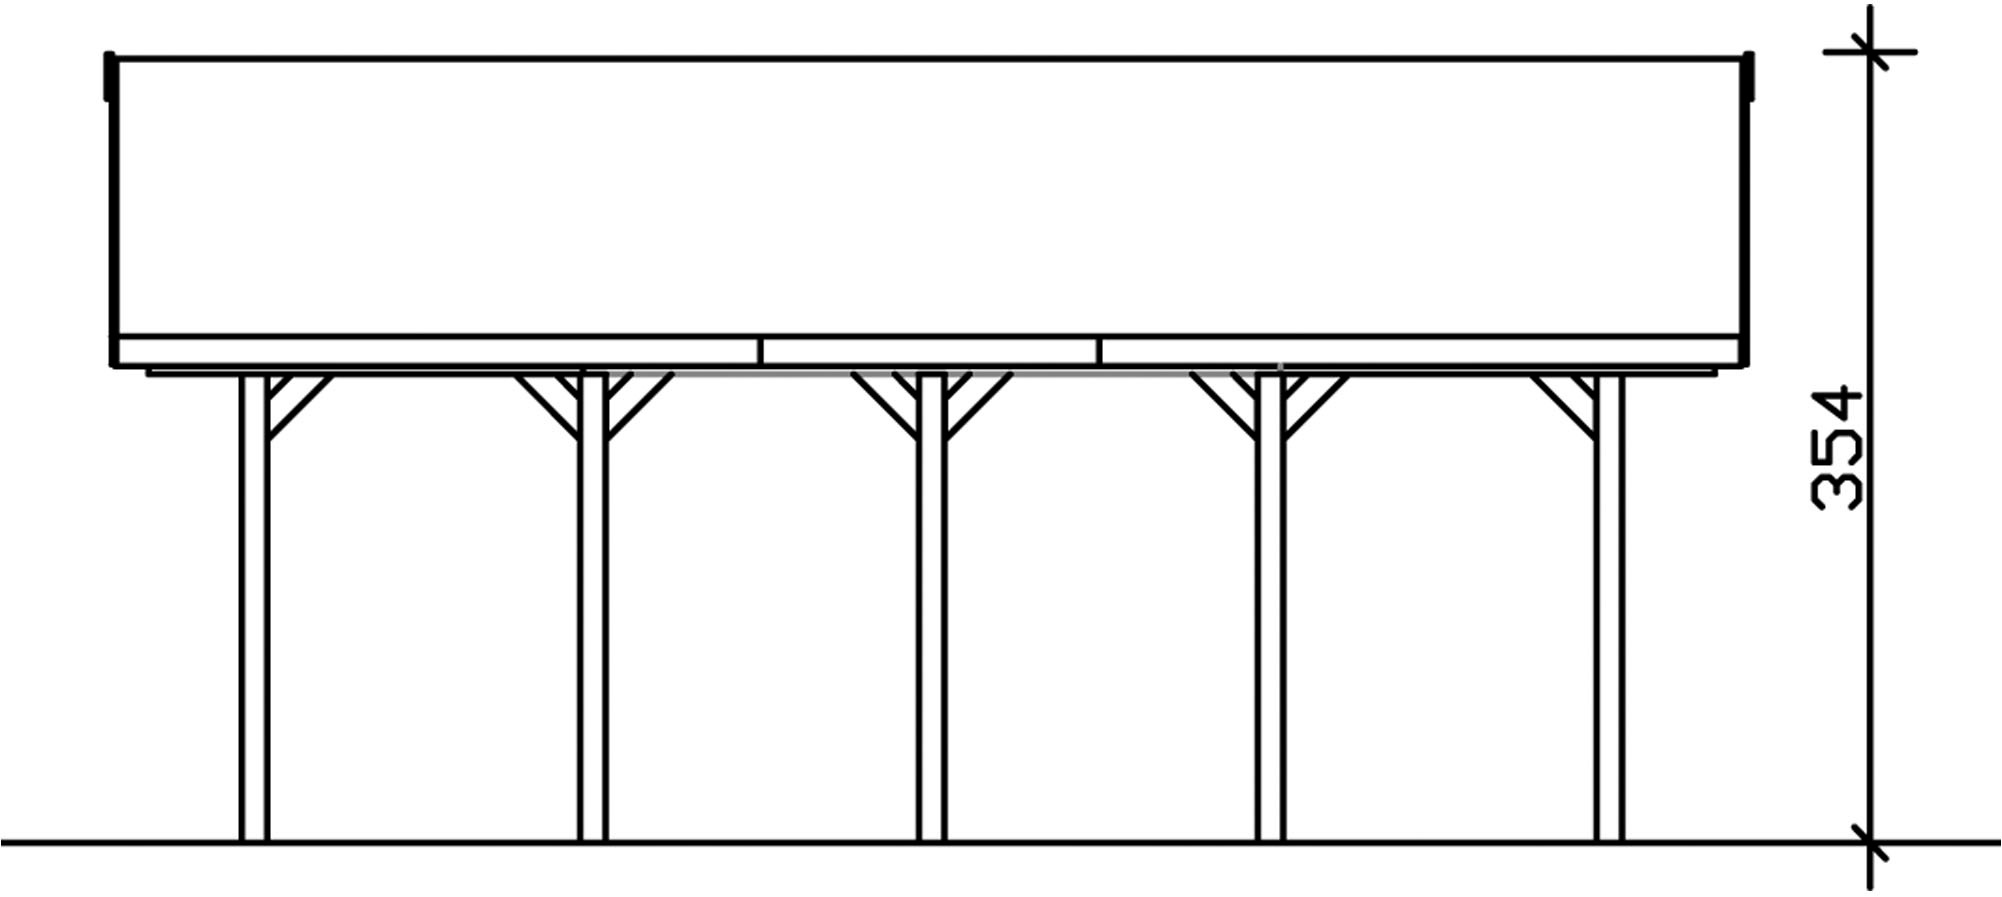 Skanholz Doppelcarport »Wallgau«, Nadelholz, 530 cm, Nussbaum, 620x750cm, mit Dachlattung